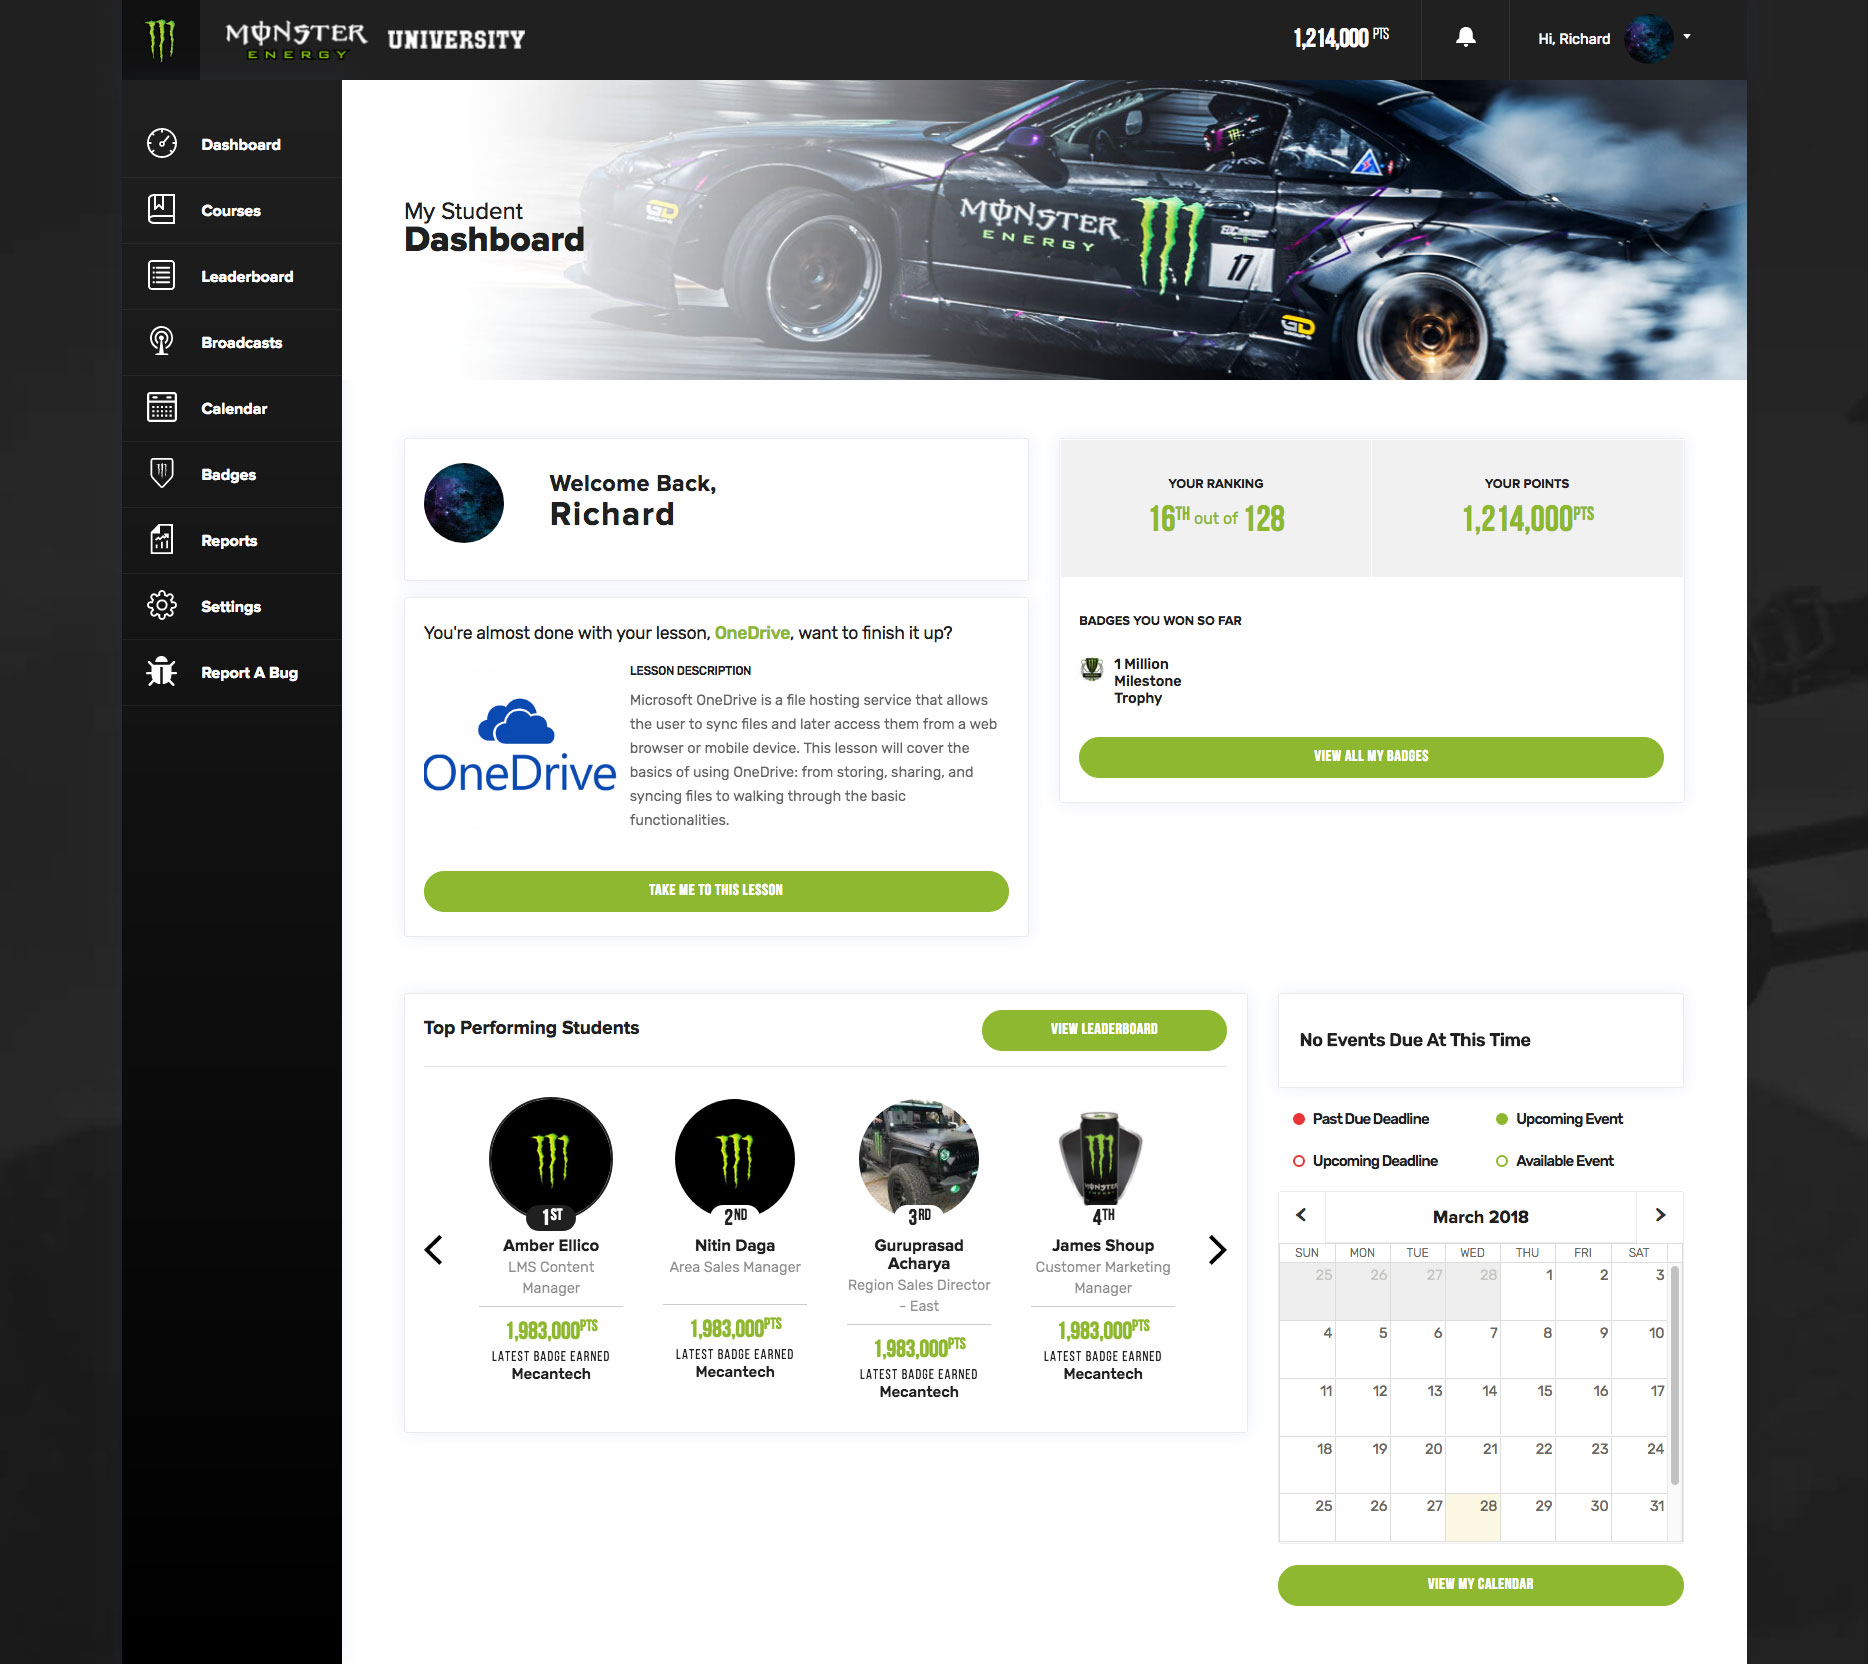 Monster Energy University Dashboard, interactive website, Ekko Media web design, video production and marketing